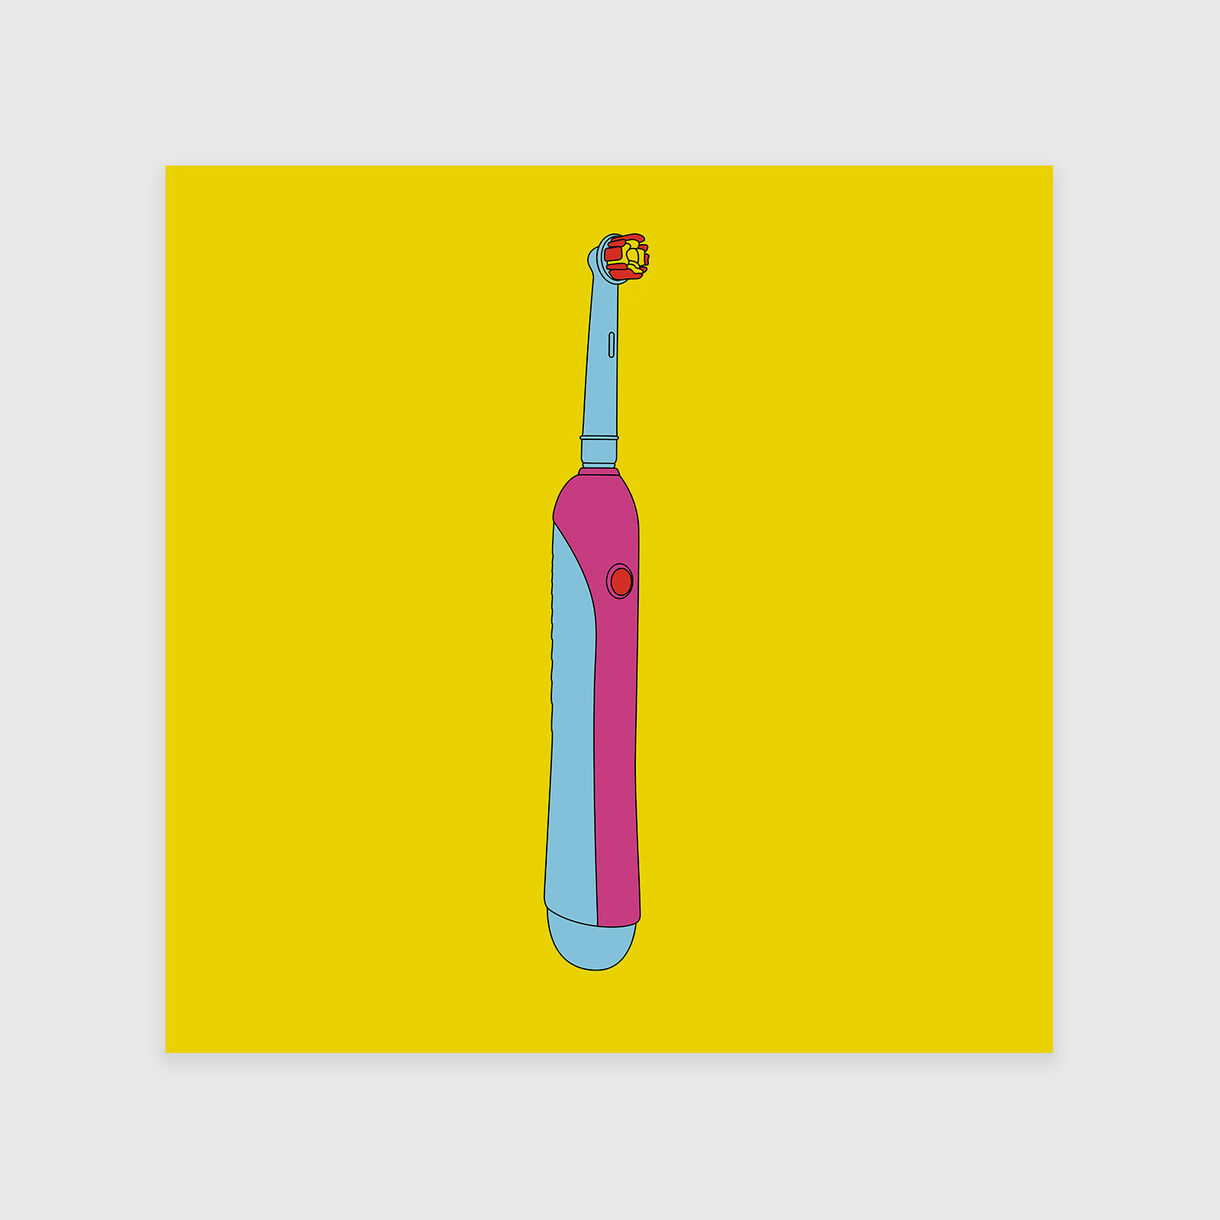 Electric Toothbrush, Michael Craig-Martin